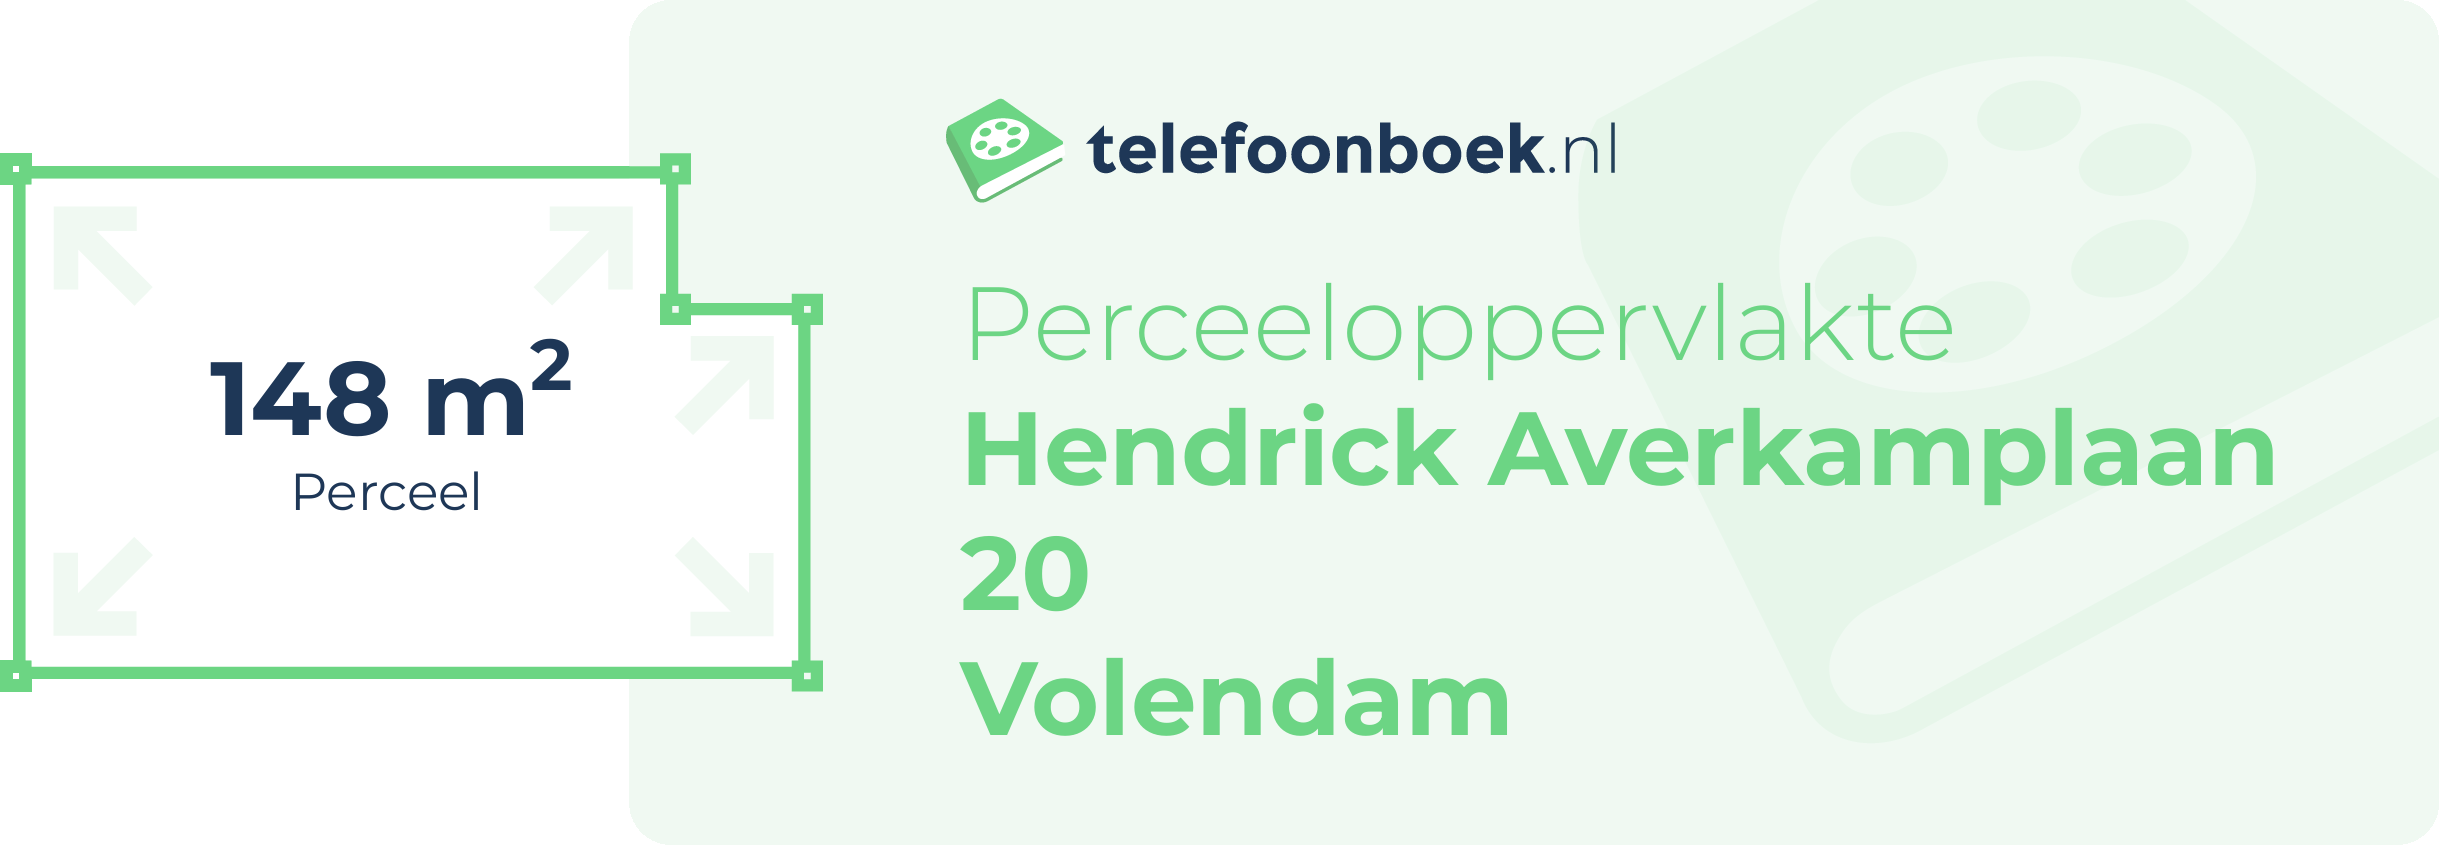 Perceeloppervlakte Hendrick Averkamplaan 20 Volendam